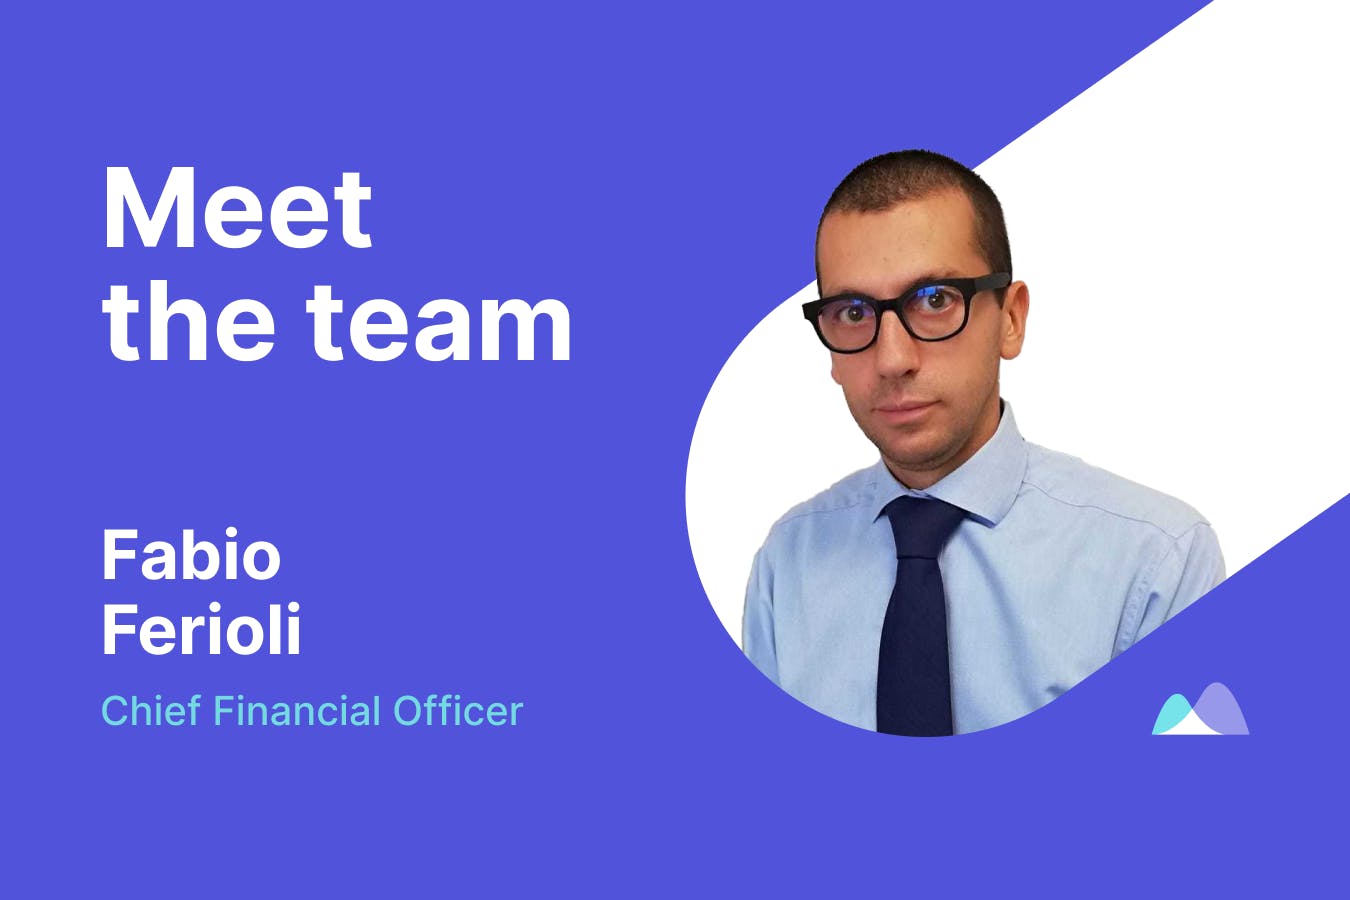 Fabio Ferioli, Chief Financial Officer at Smartpricing